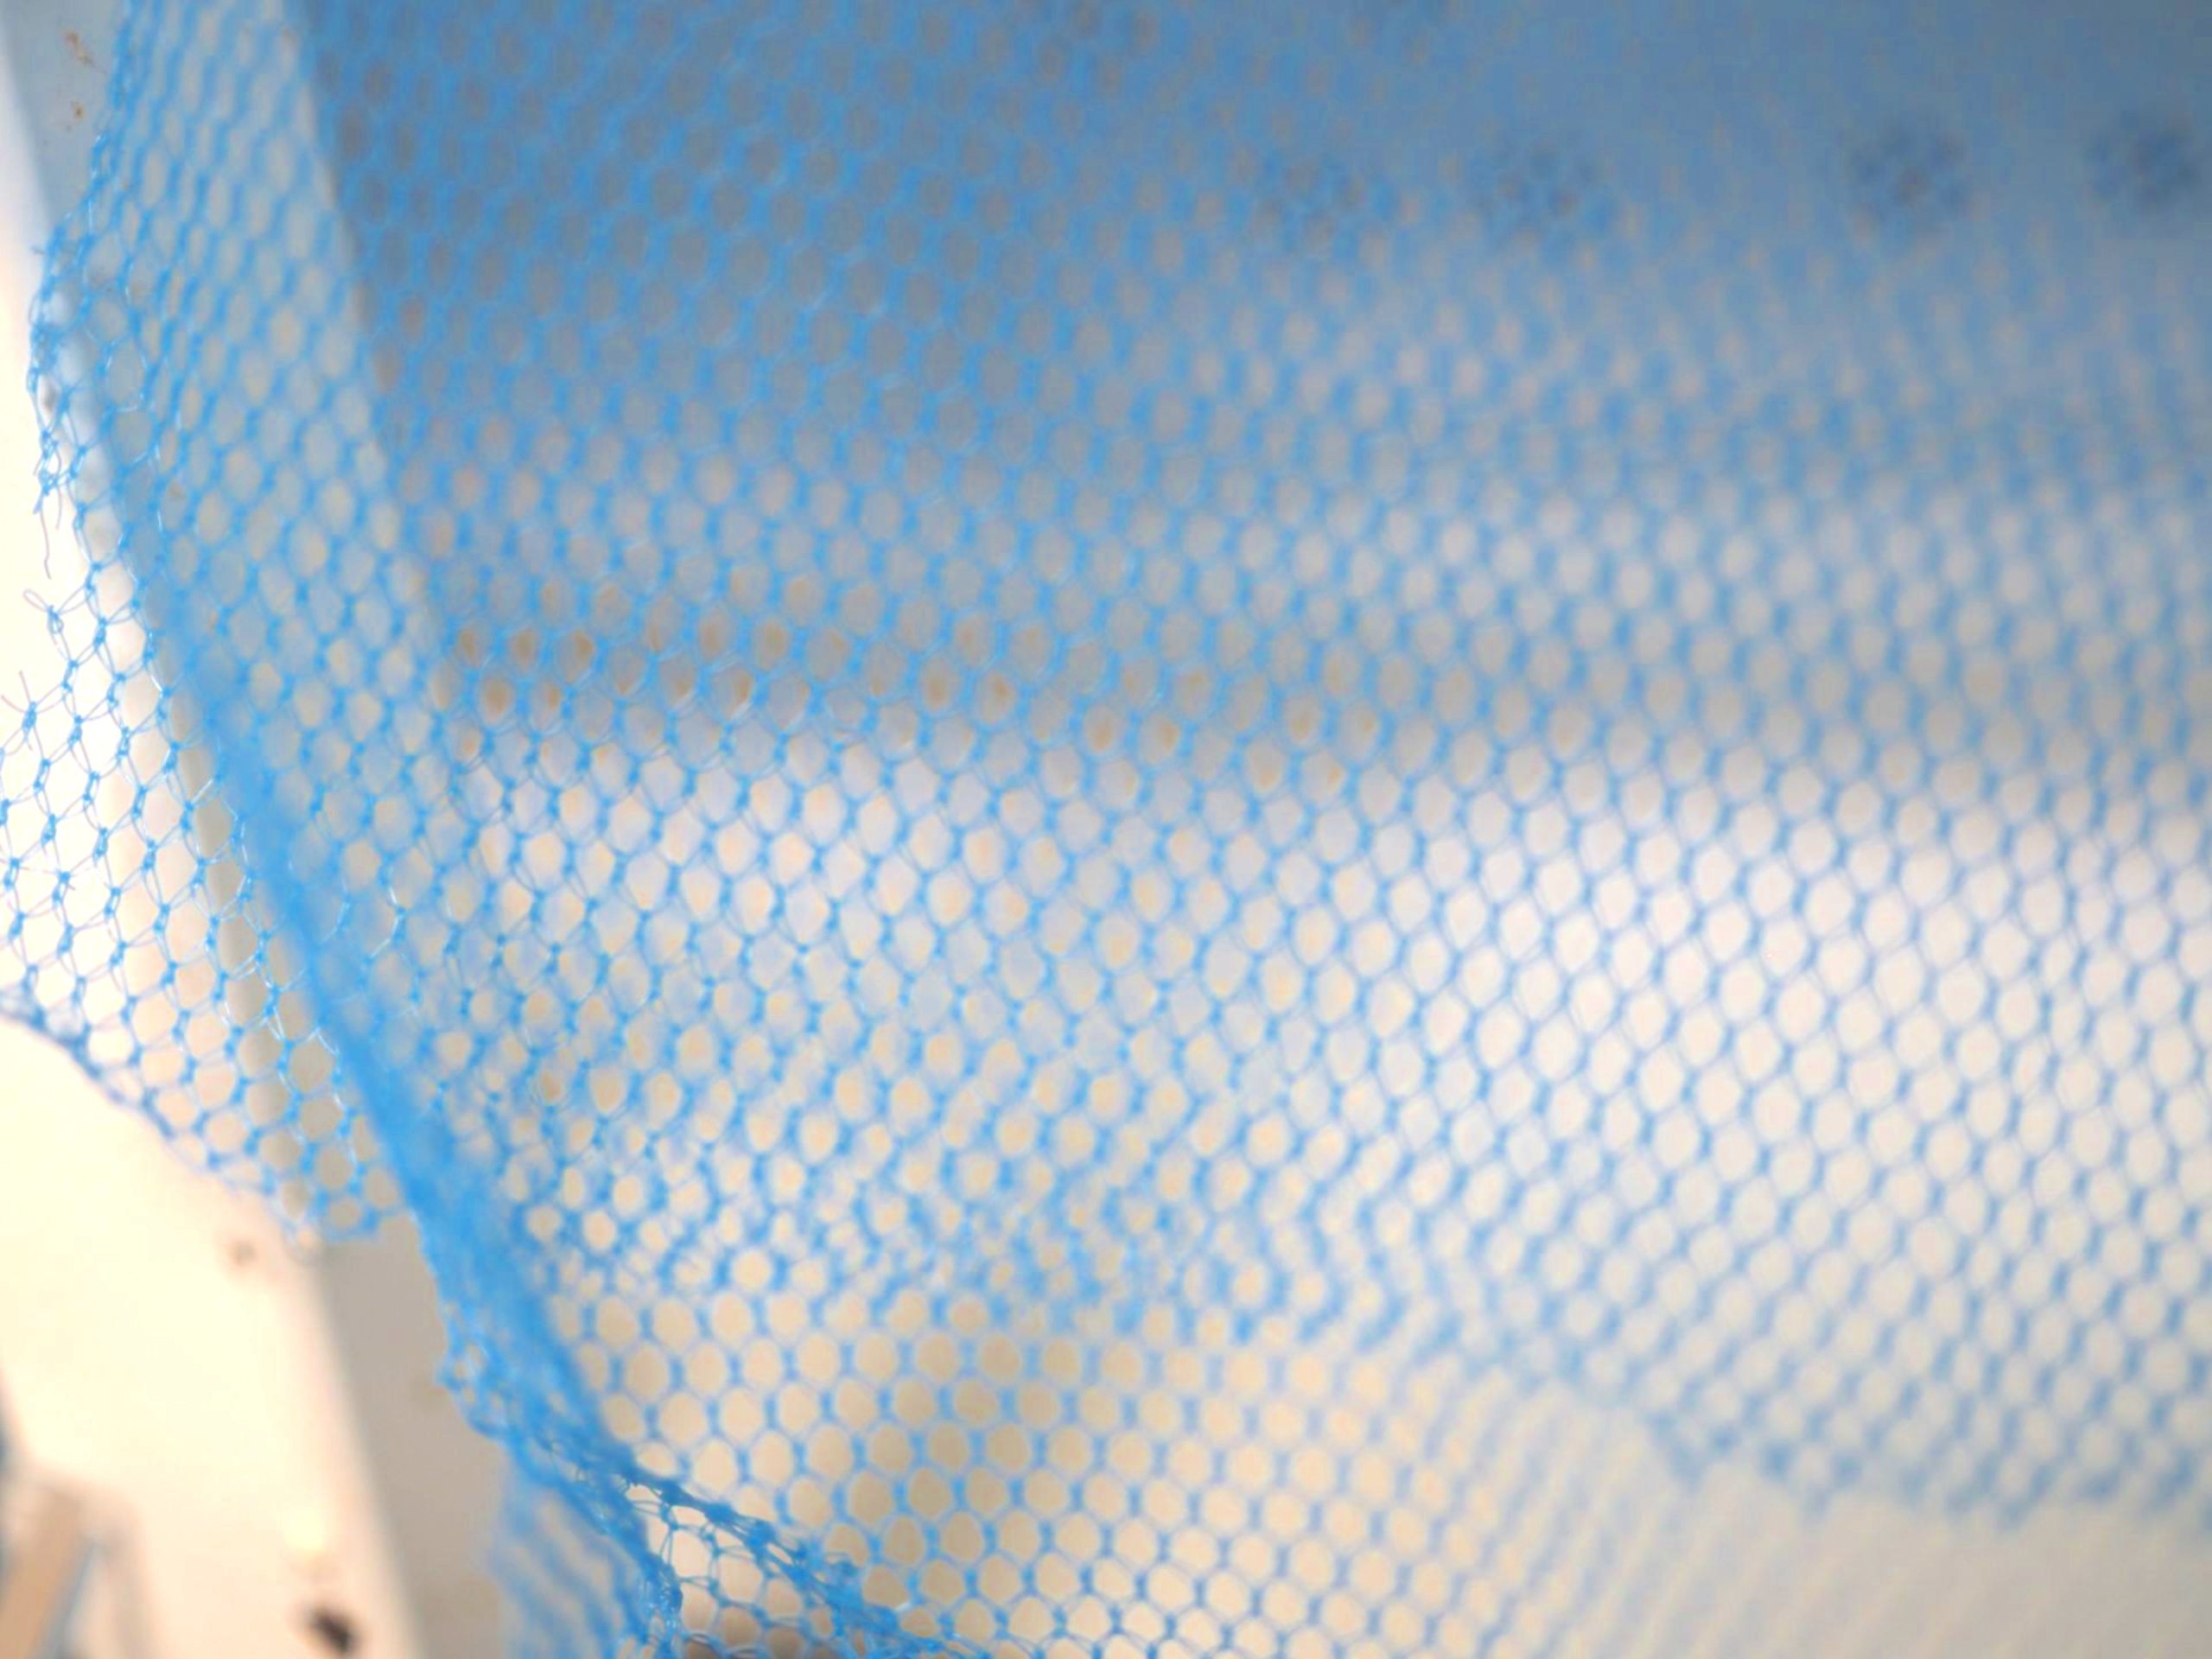 Blue bed net fabric